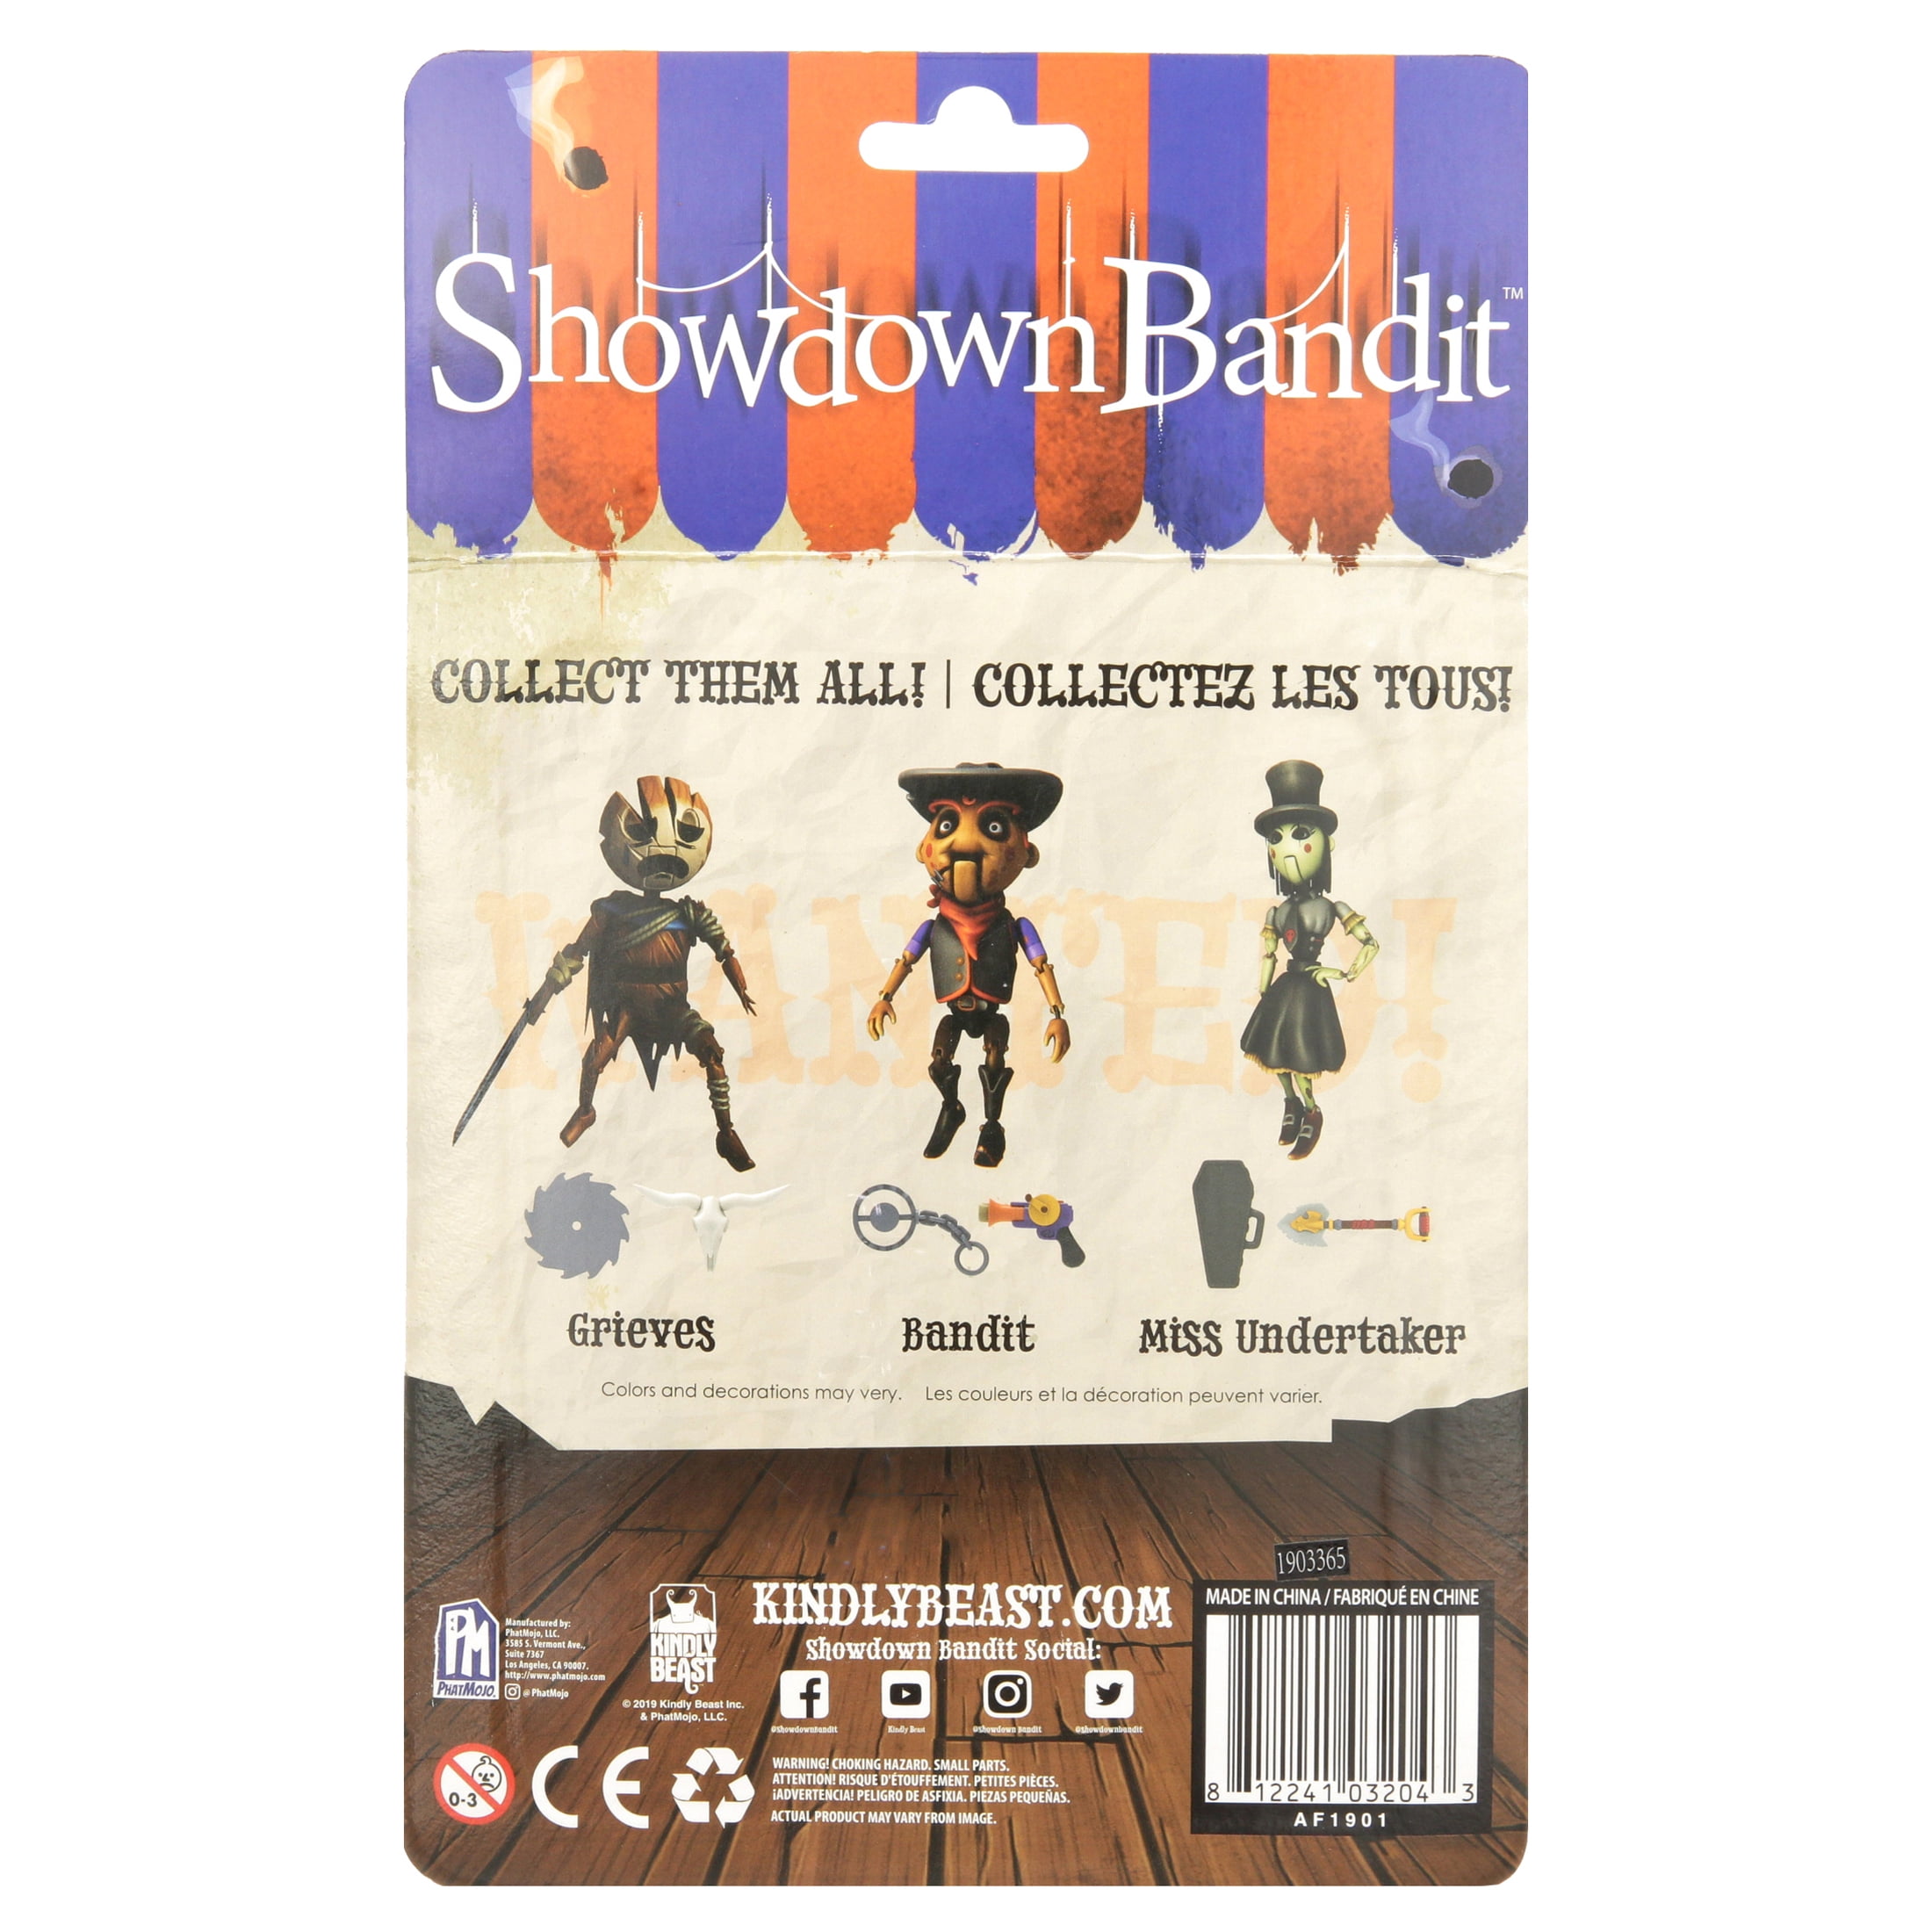 Showdown Bandit at the best price